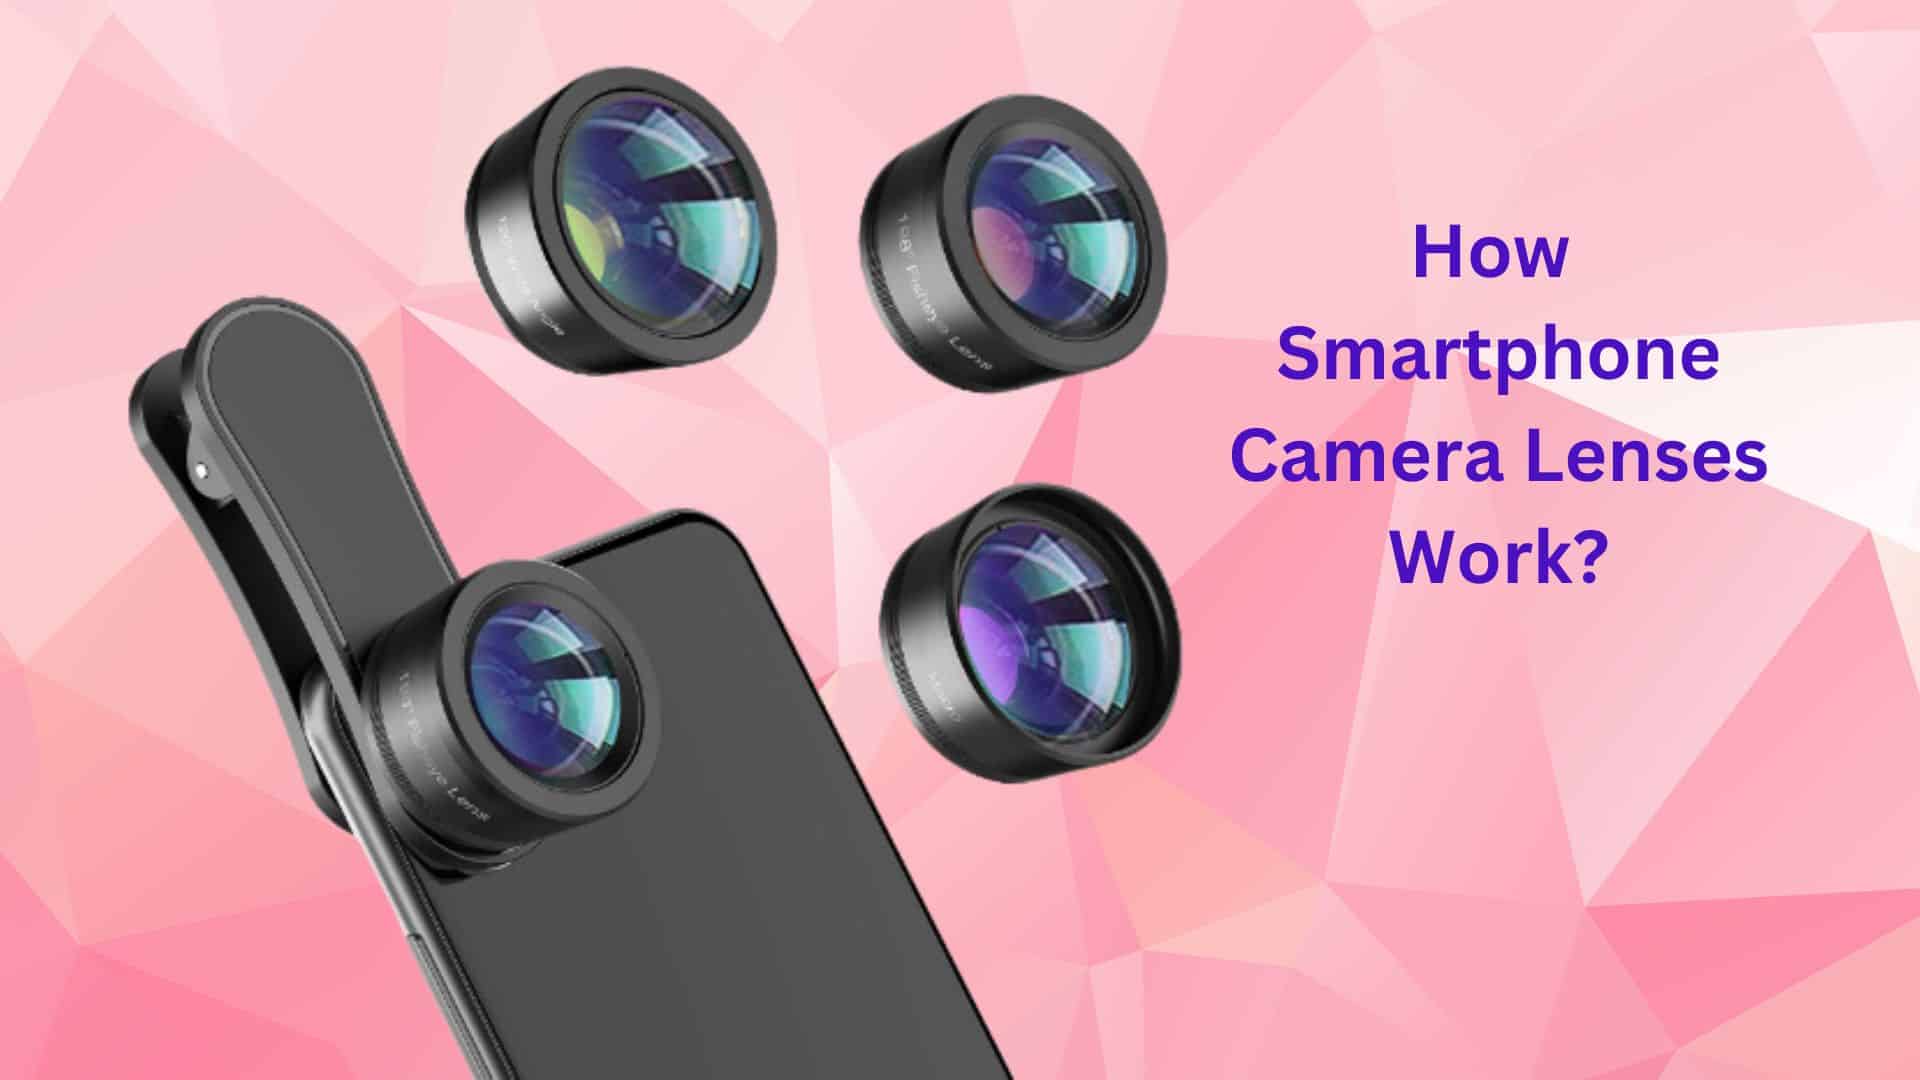 How Smartphone Camera Lenses Work